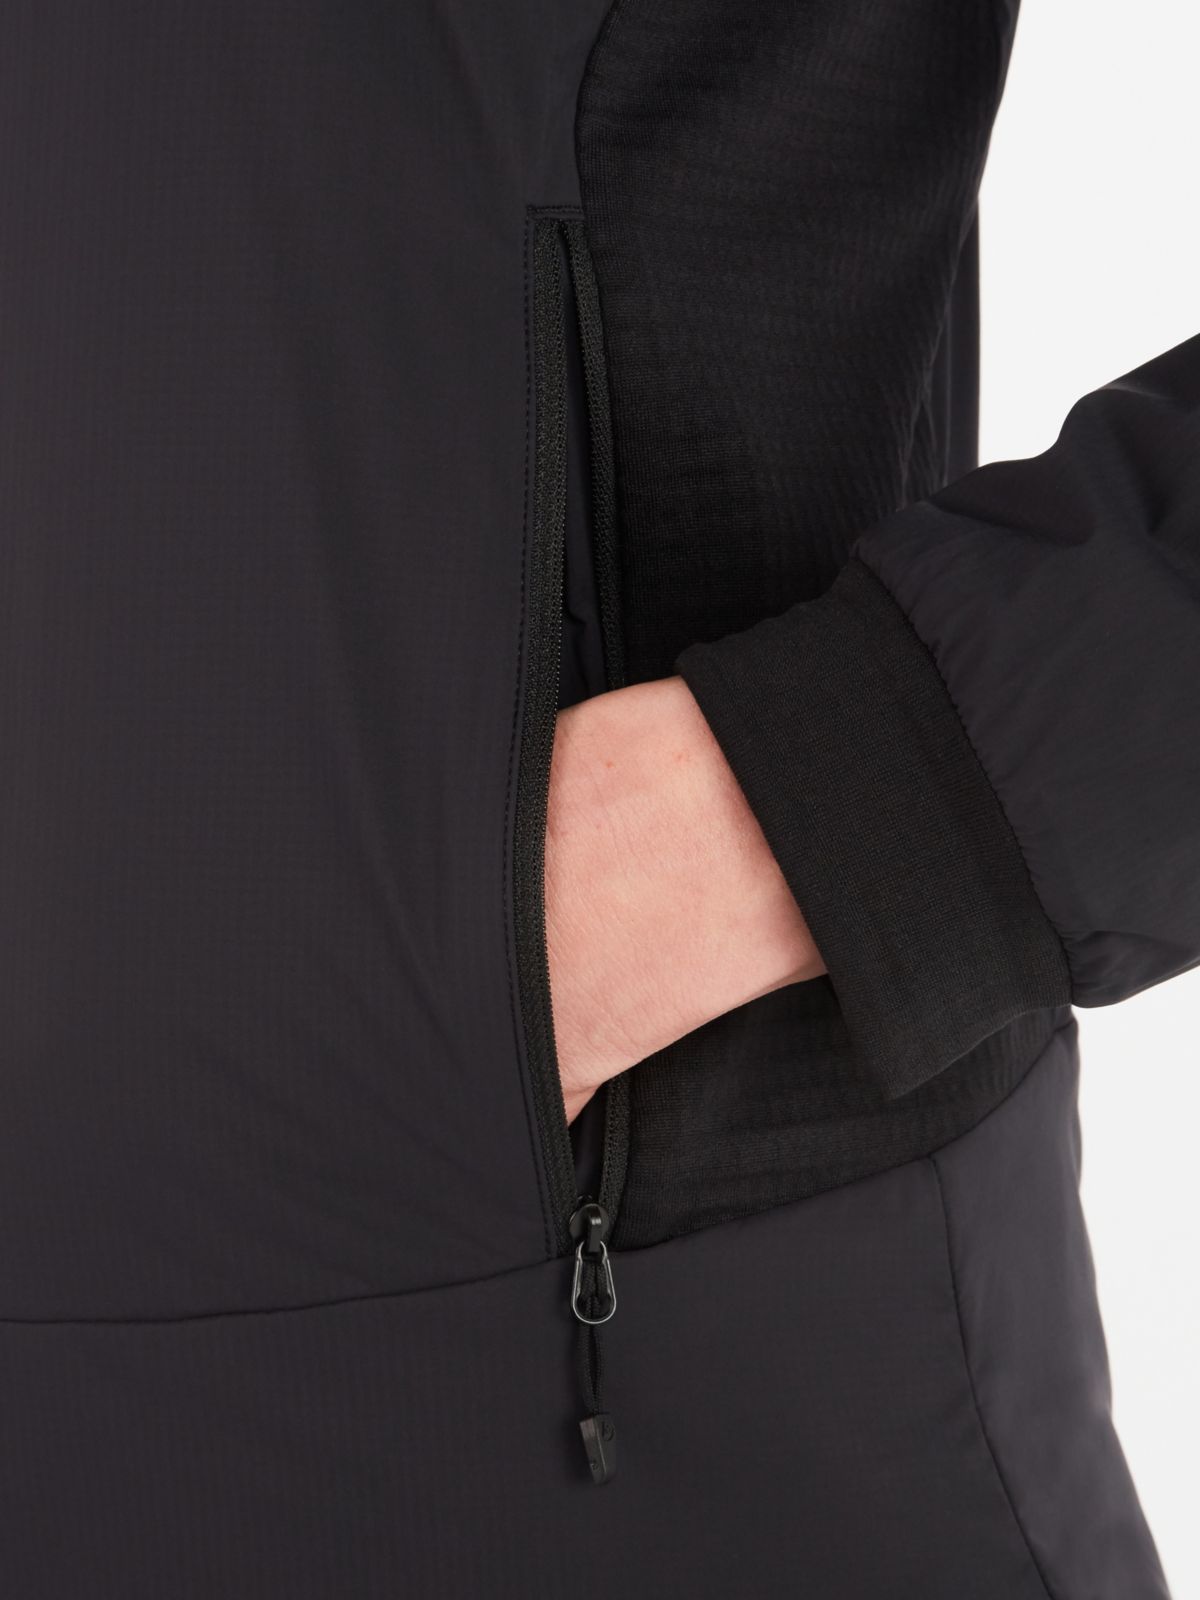 Closeup of jacket pocket